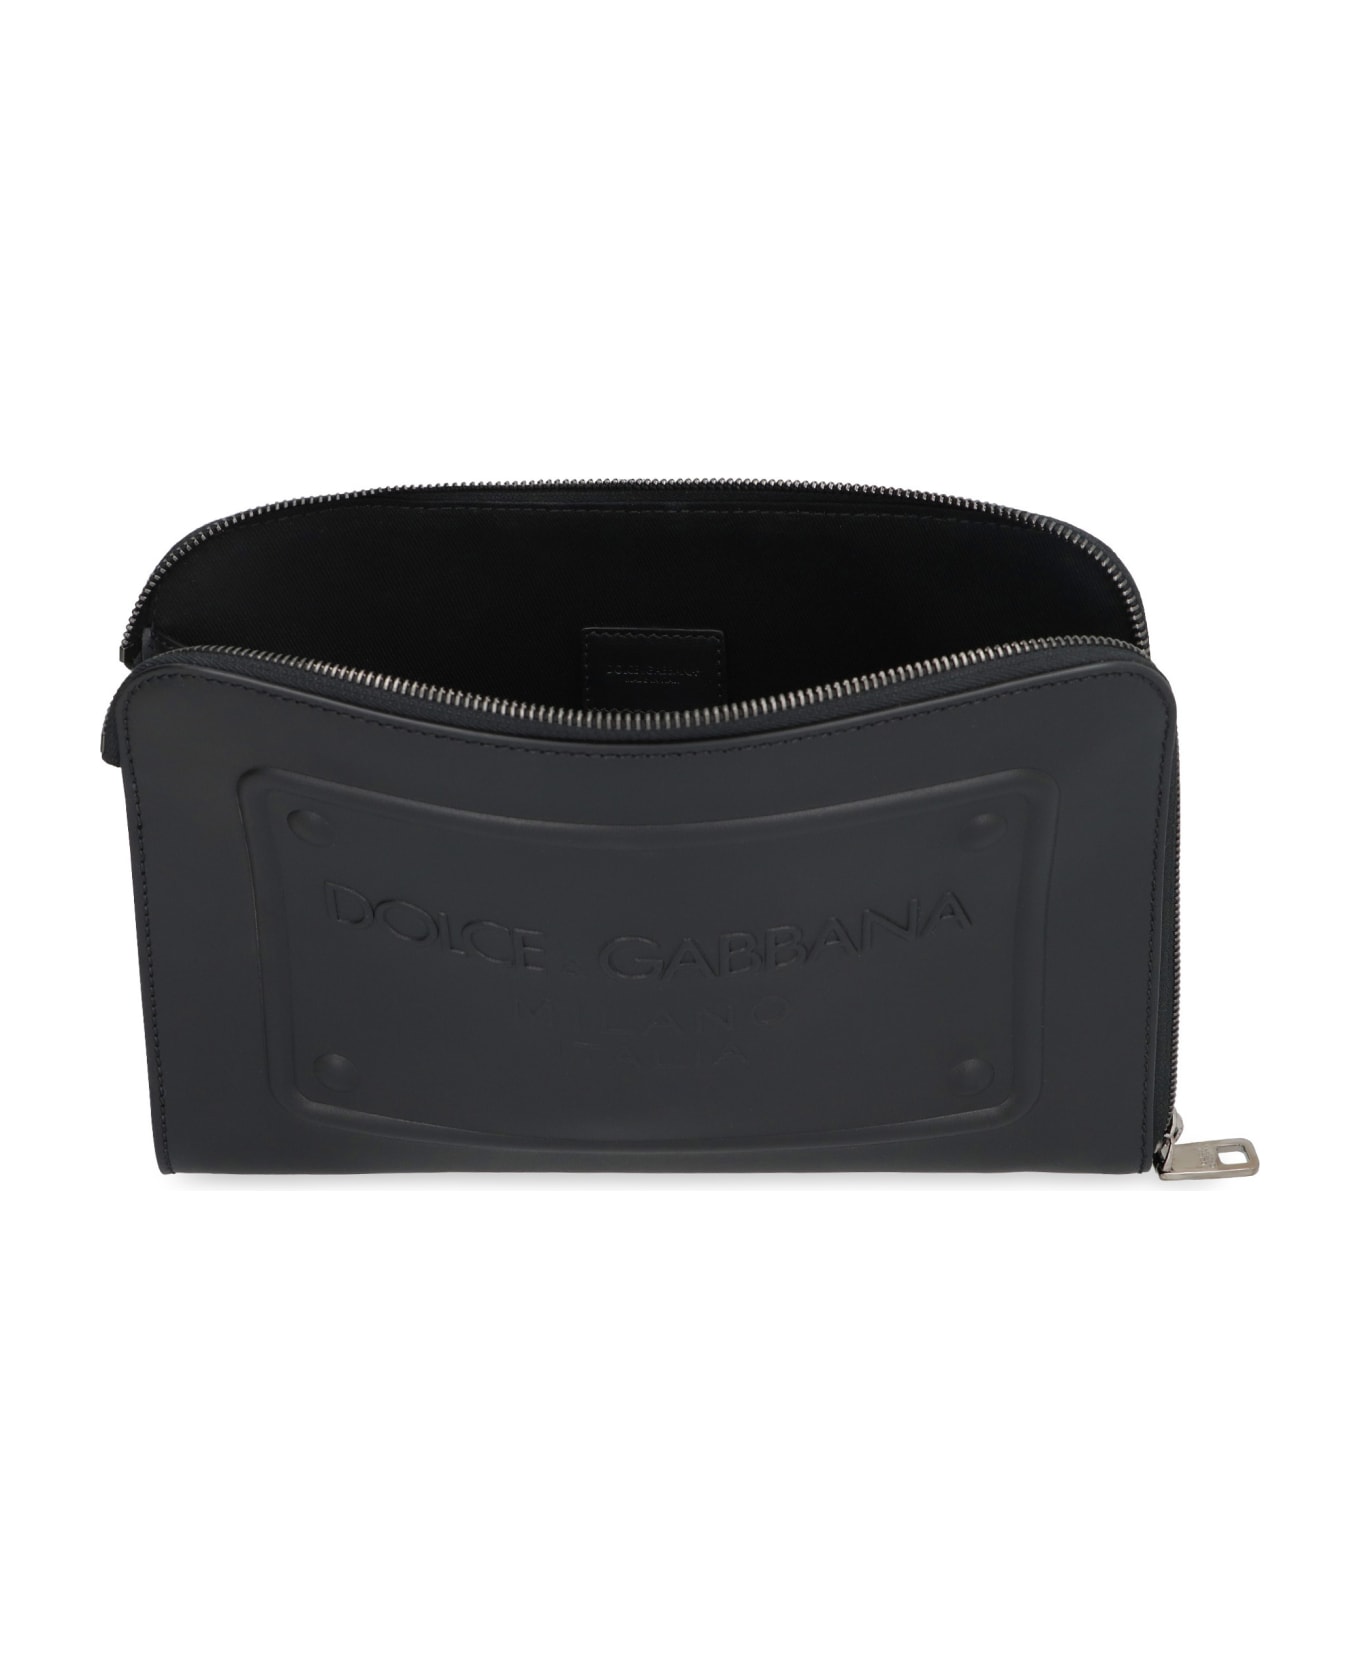 Dolce & Gabbana Leather Clutch - black バッグ